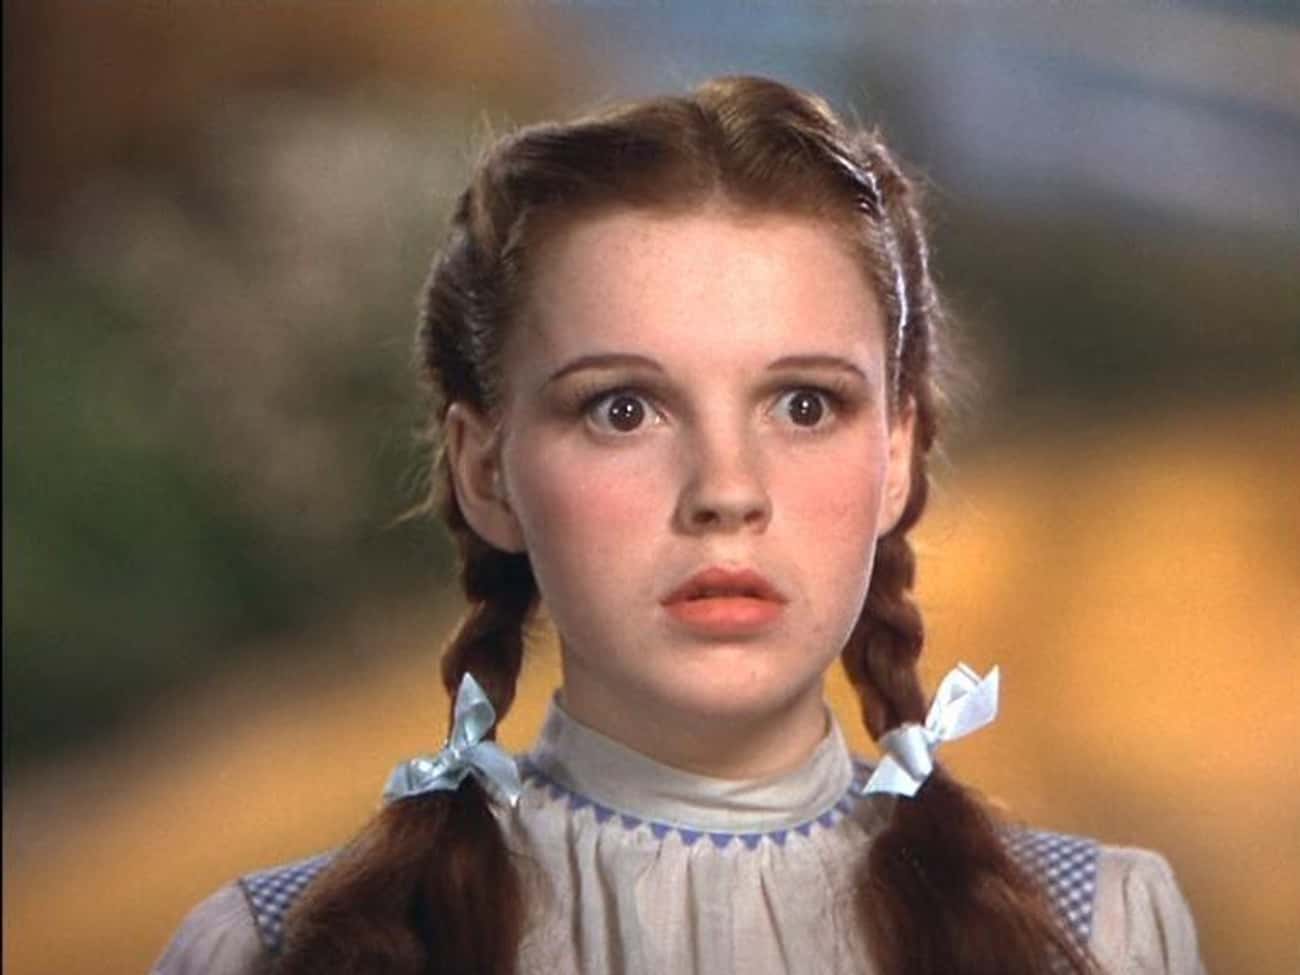 Dorothy Represents The Average American